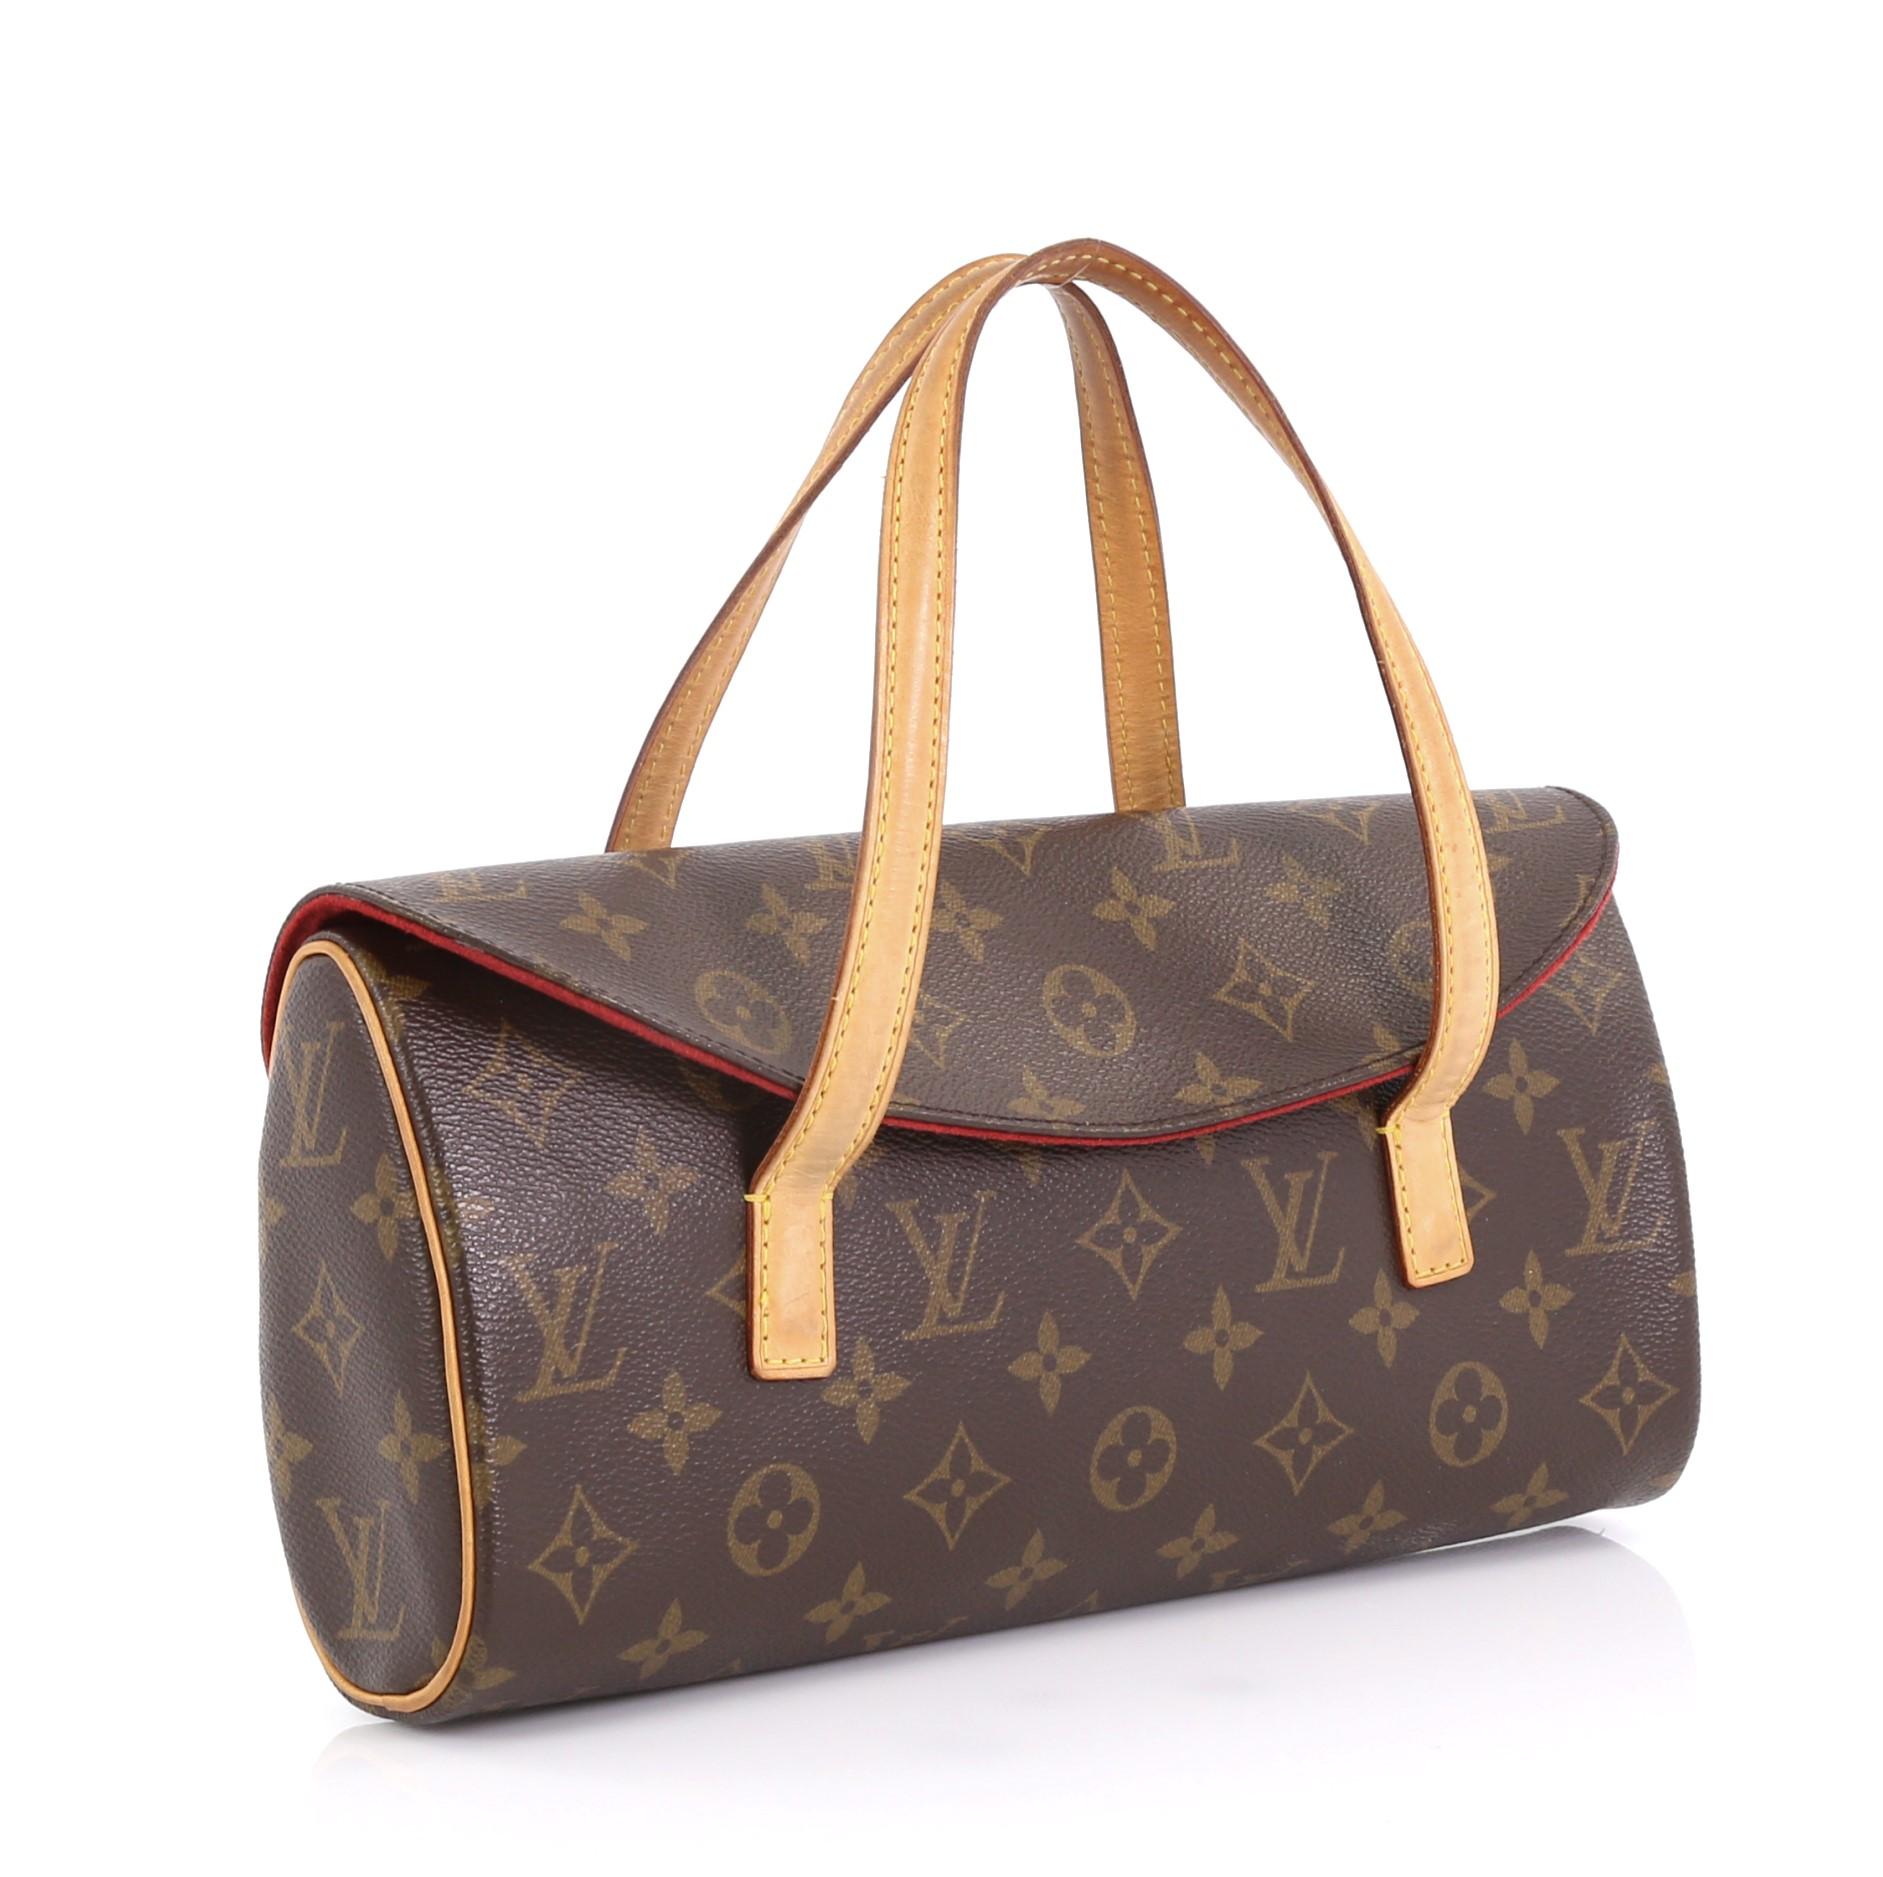 Vintage Louis Vuitton Sonatine handbag - Authentic! for Sale in